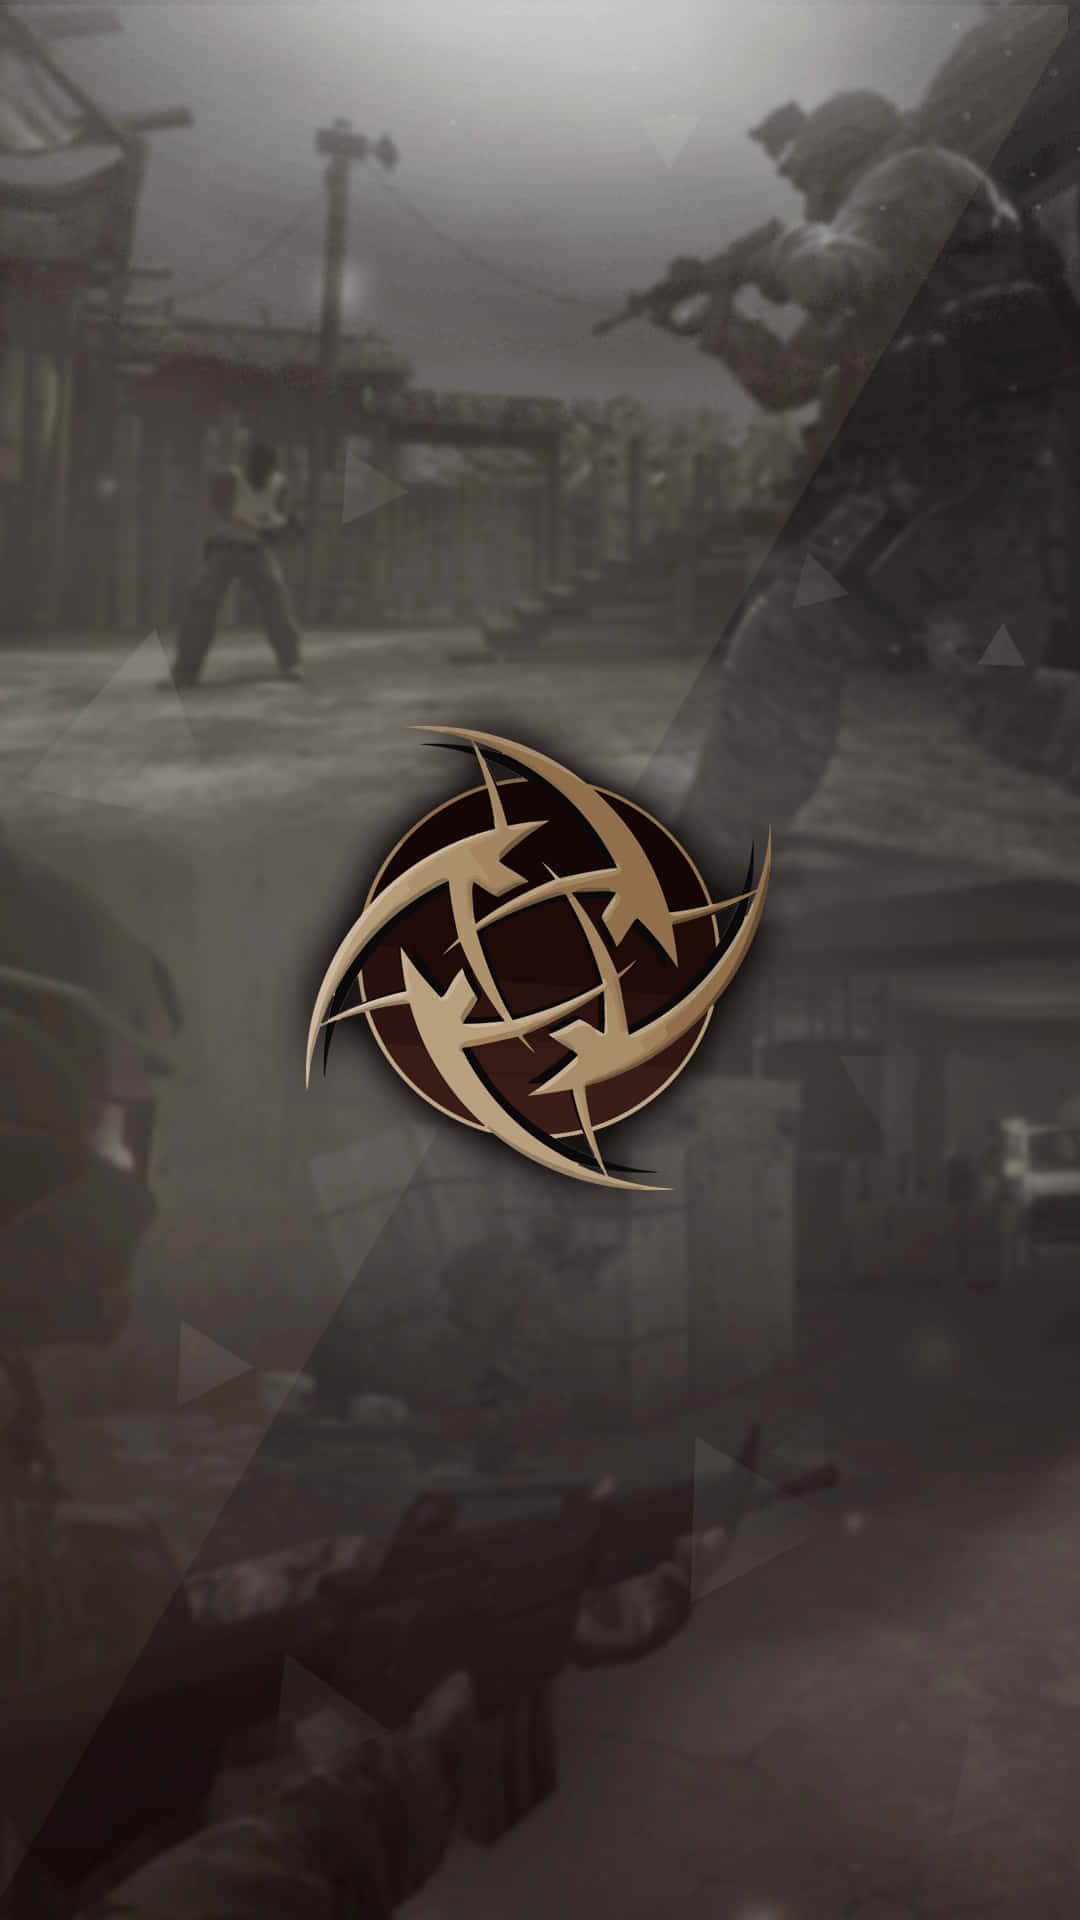 Androidcounter-strike Global Offensive Ninja Logo Bakgrund